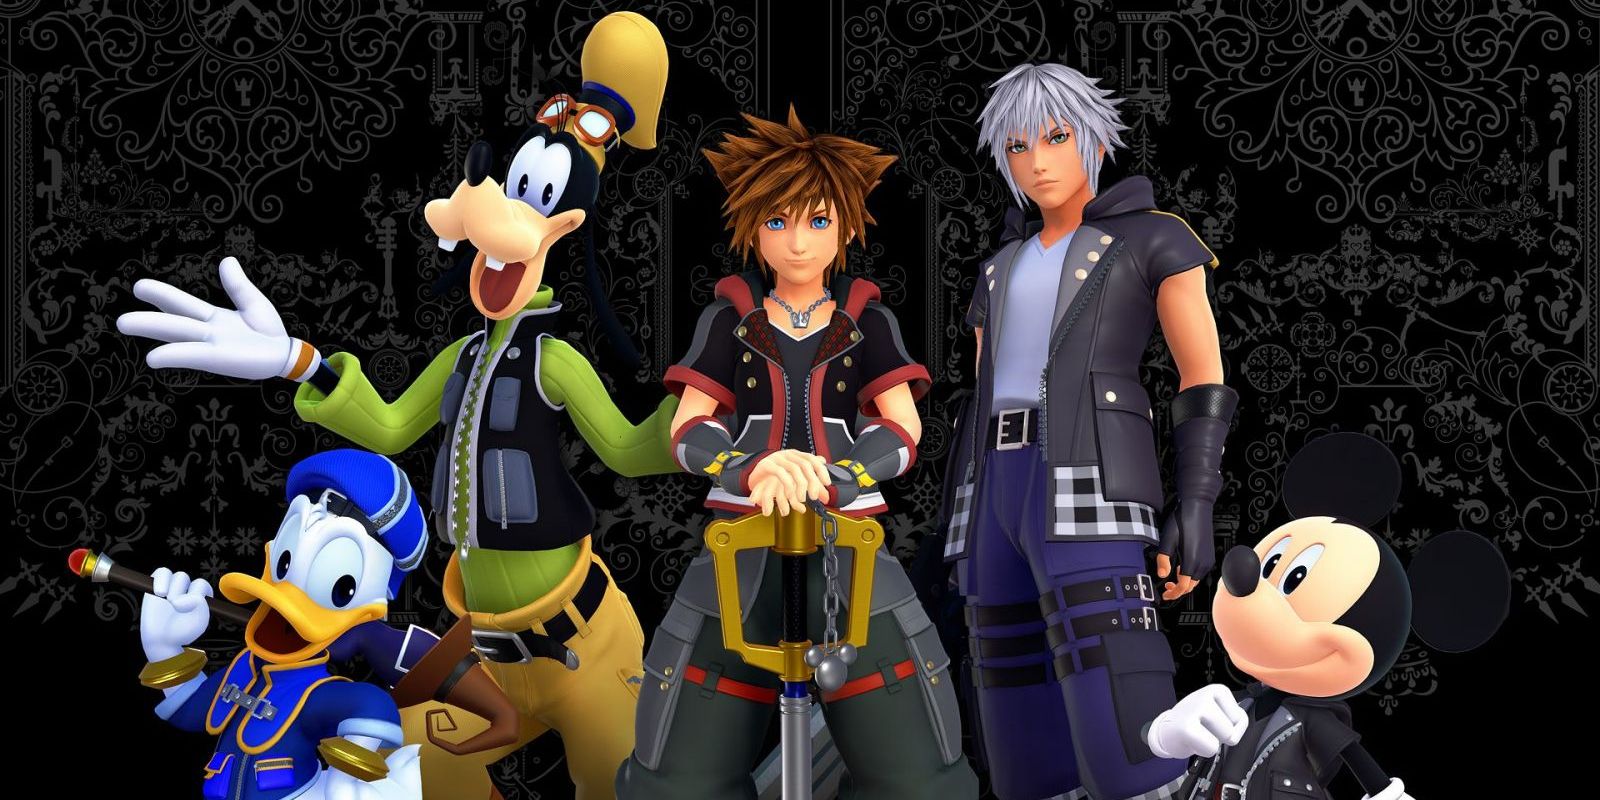 Sora Riku Mickey Donald and Goody in Kingdom Hearts III character banner